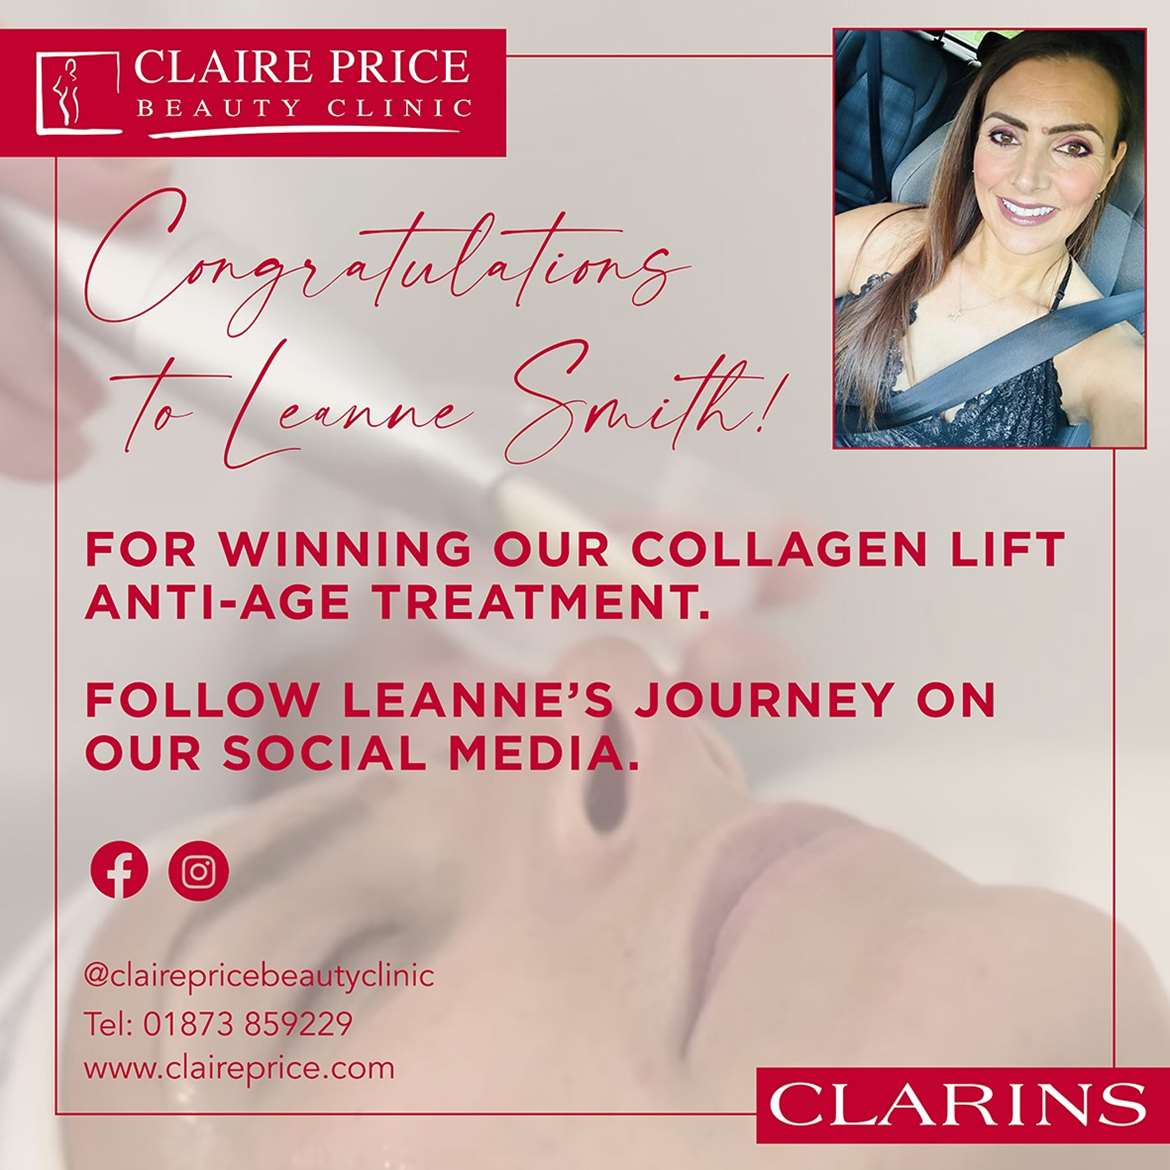 Congratulations Leanne Smith